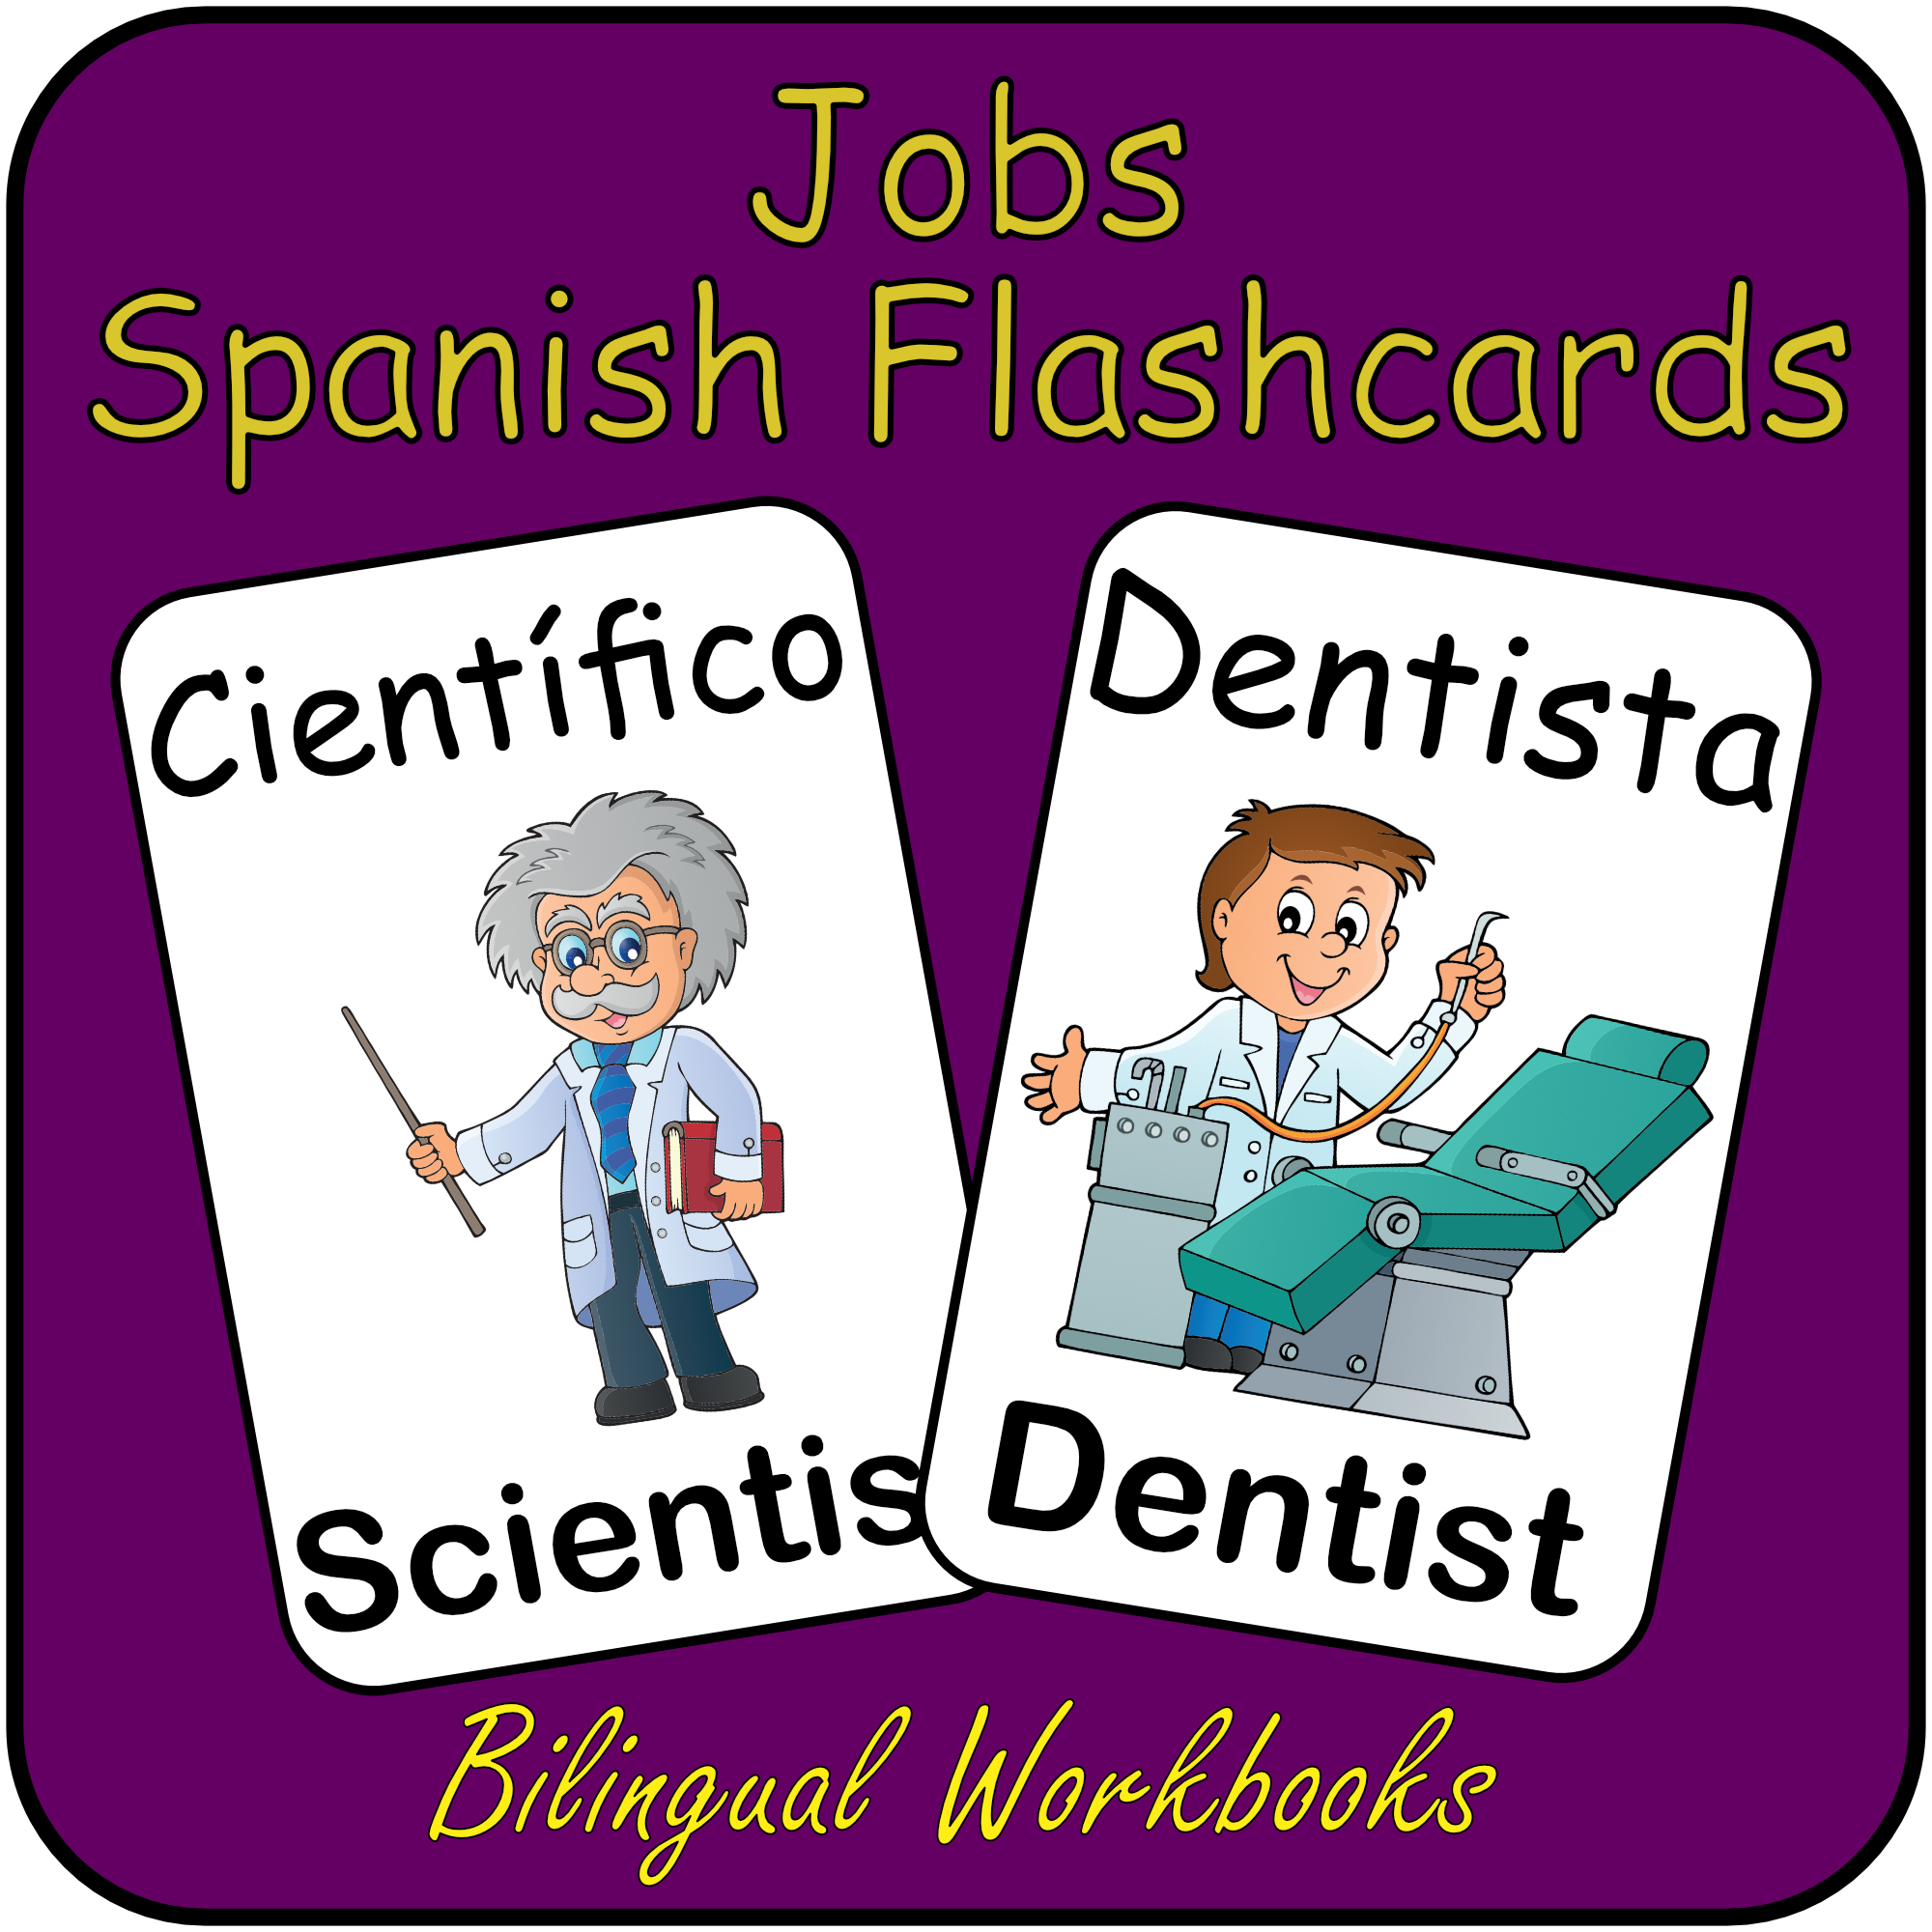 JOBS - Spanish Flash Cards - Vocabulary Study flashcards with English and Spanish - Learn or Teach Spanish